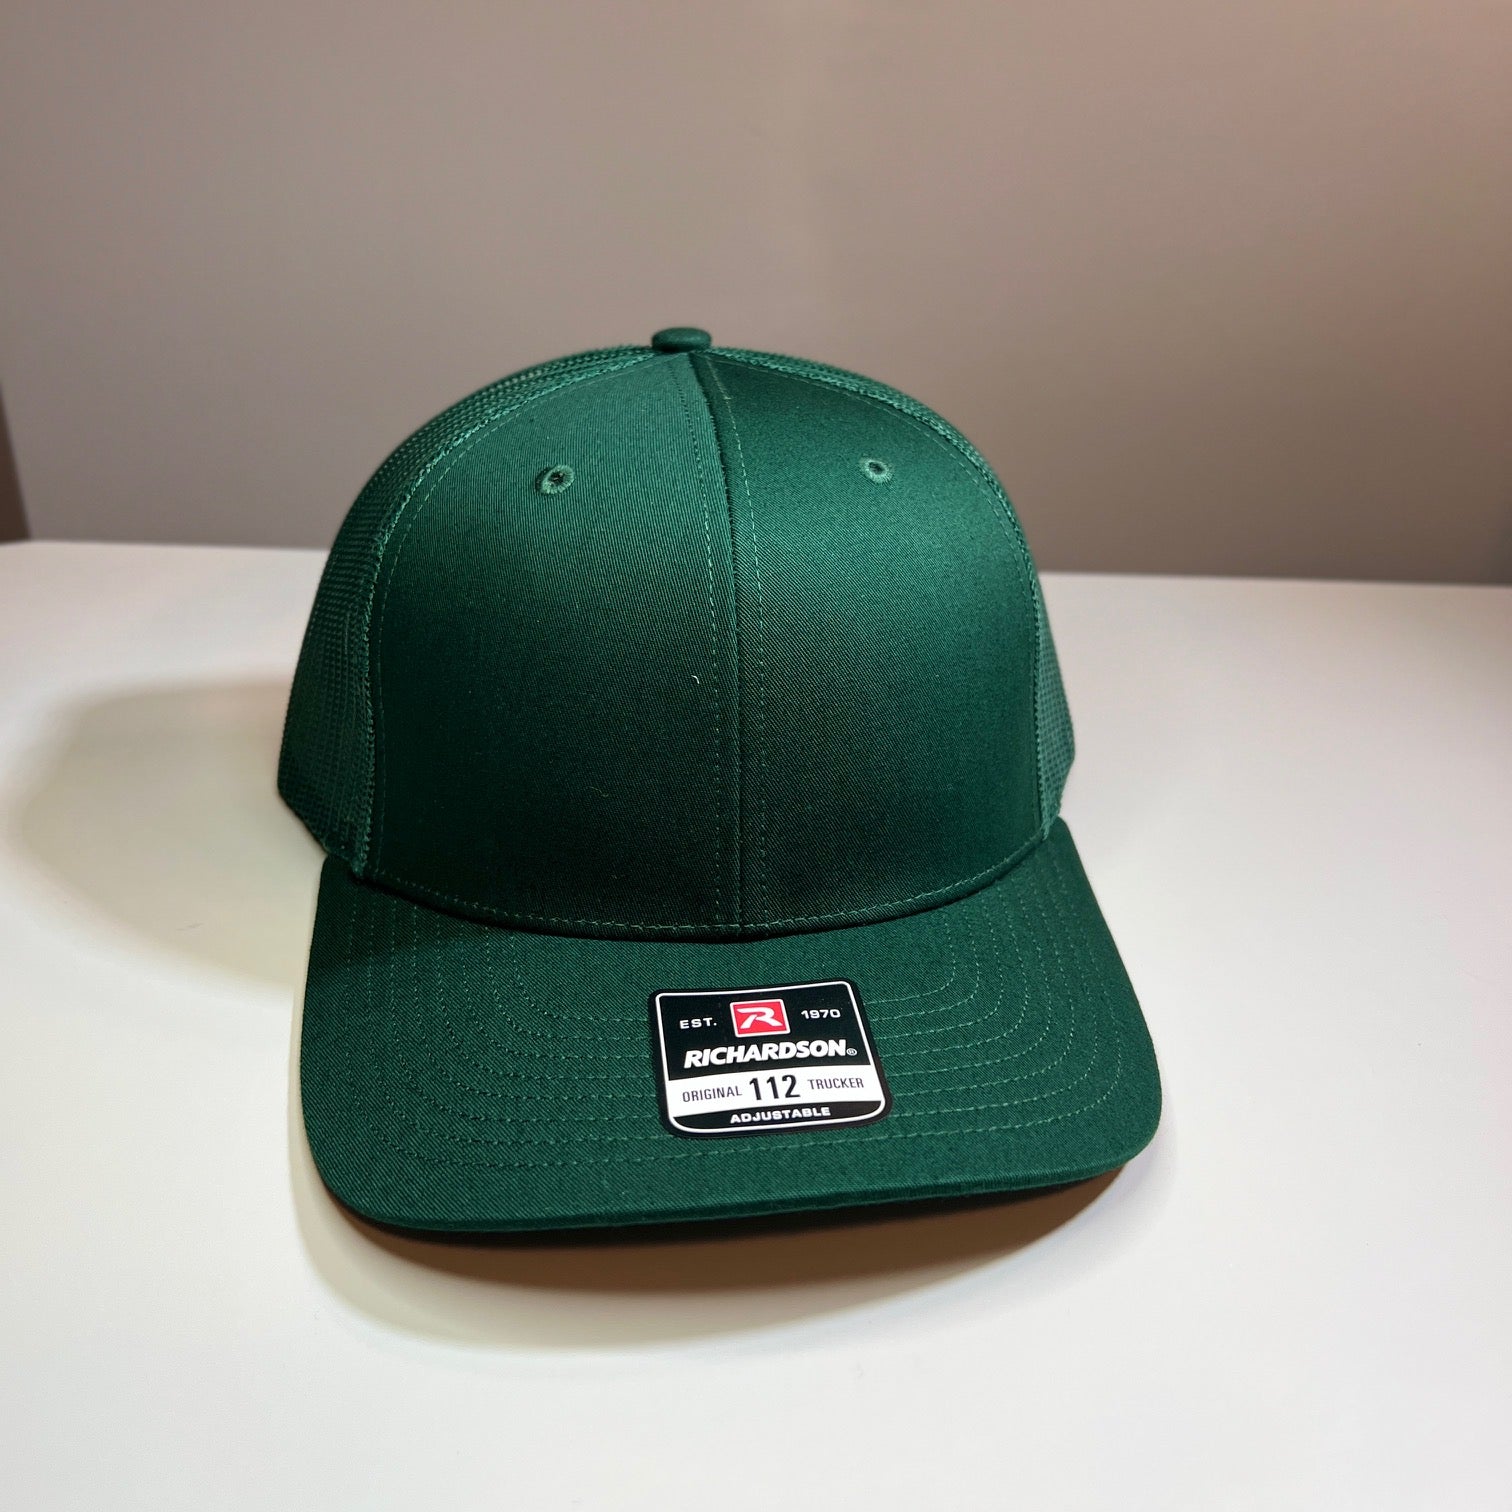 Richardson 112 Classic Trucker Hat - Dark Green